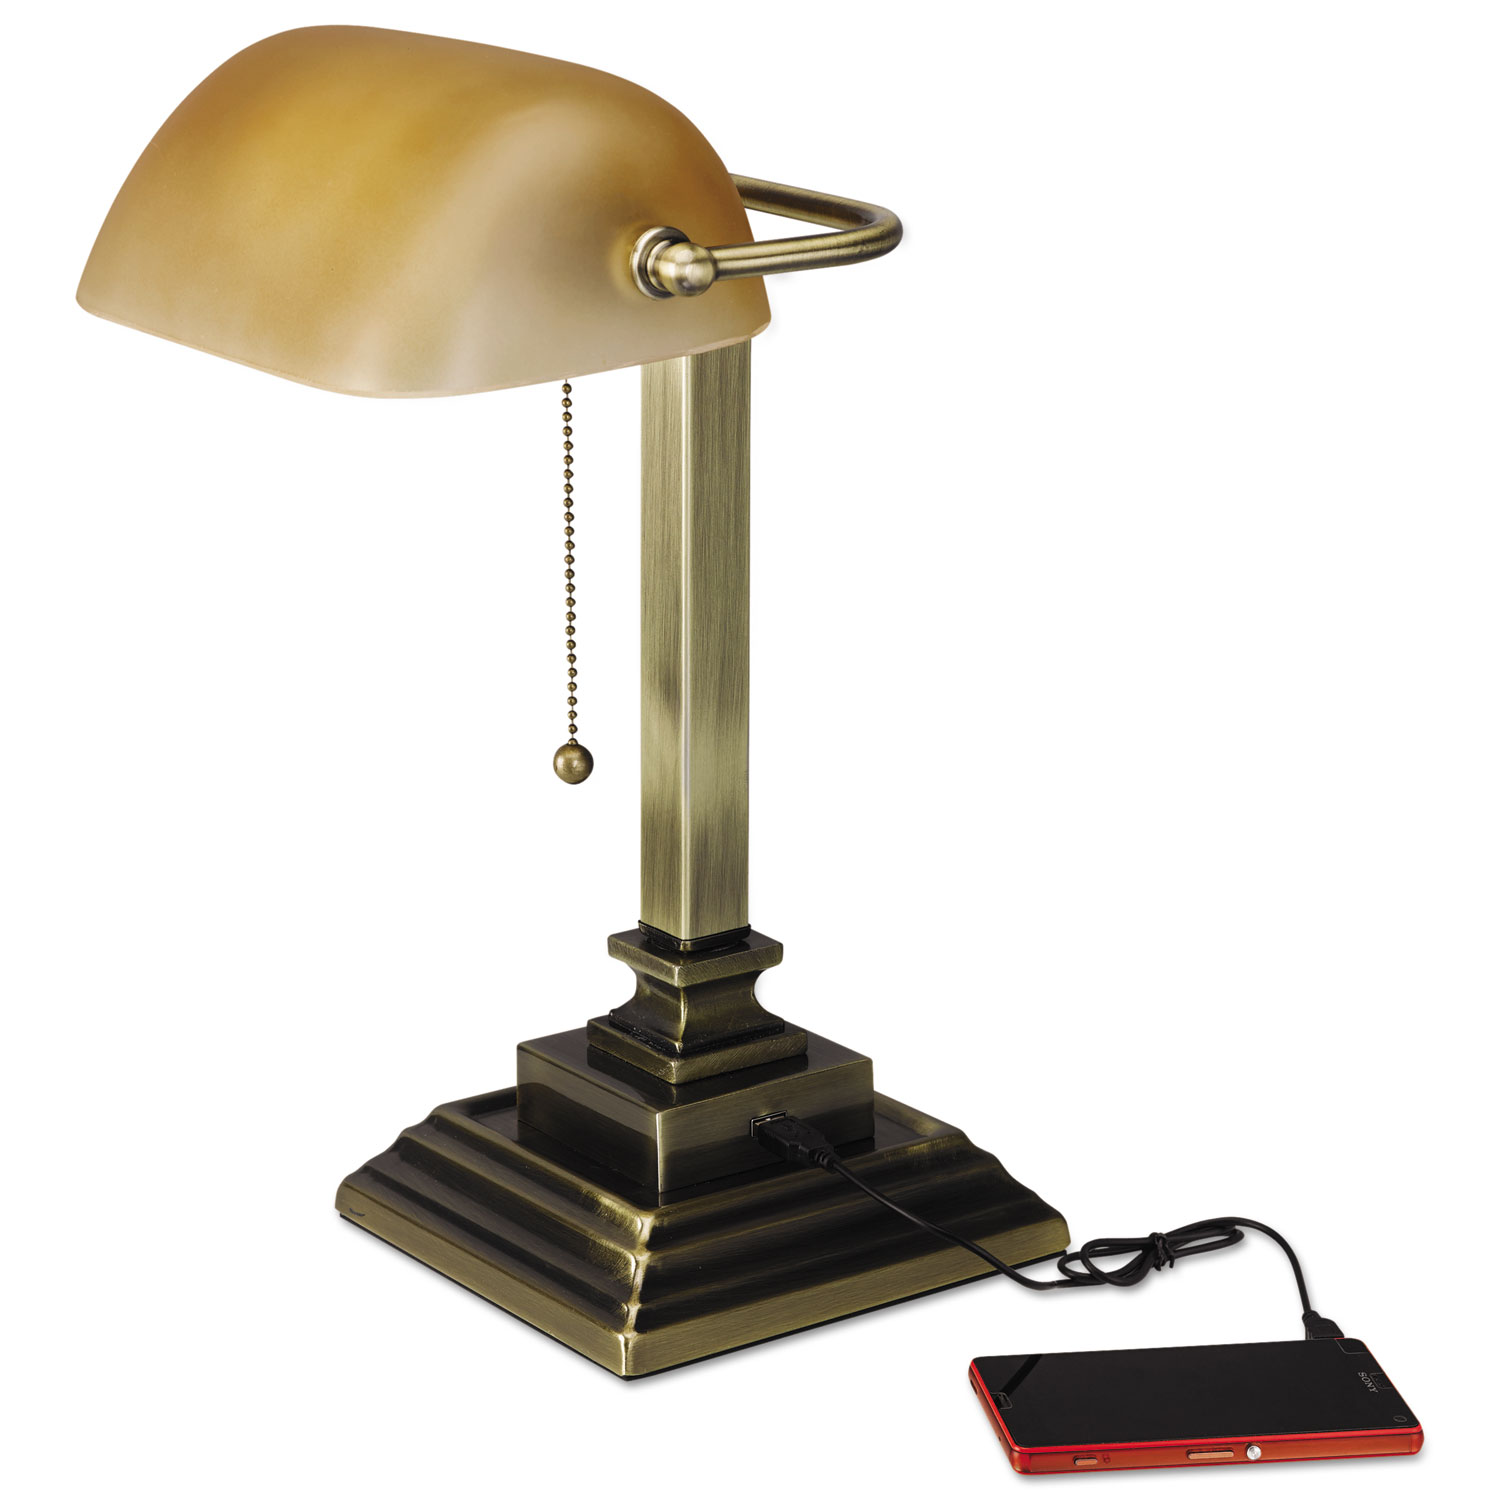  Alera ALELMP517AB Traditional Banker's Lamp with USB, 10w x 10d x 15h, Antique Brass (ALELMP517AB) 